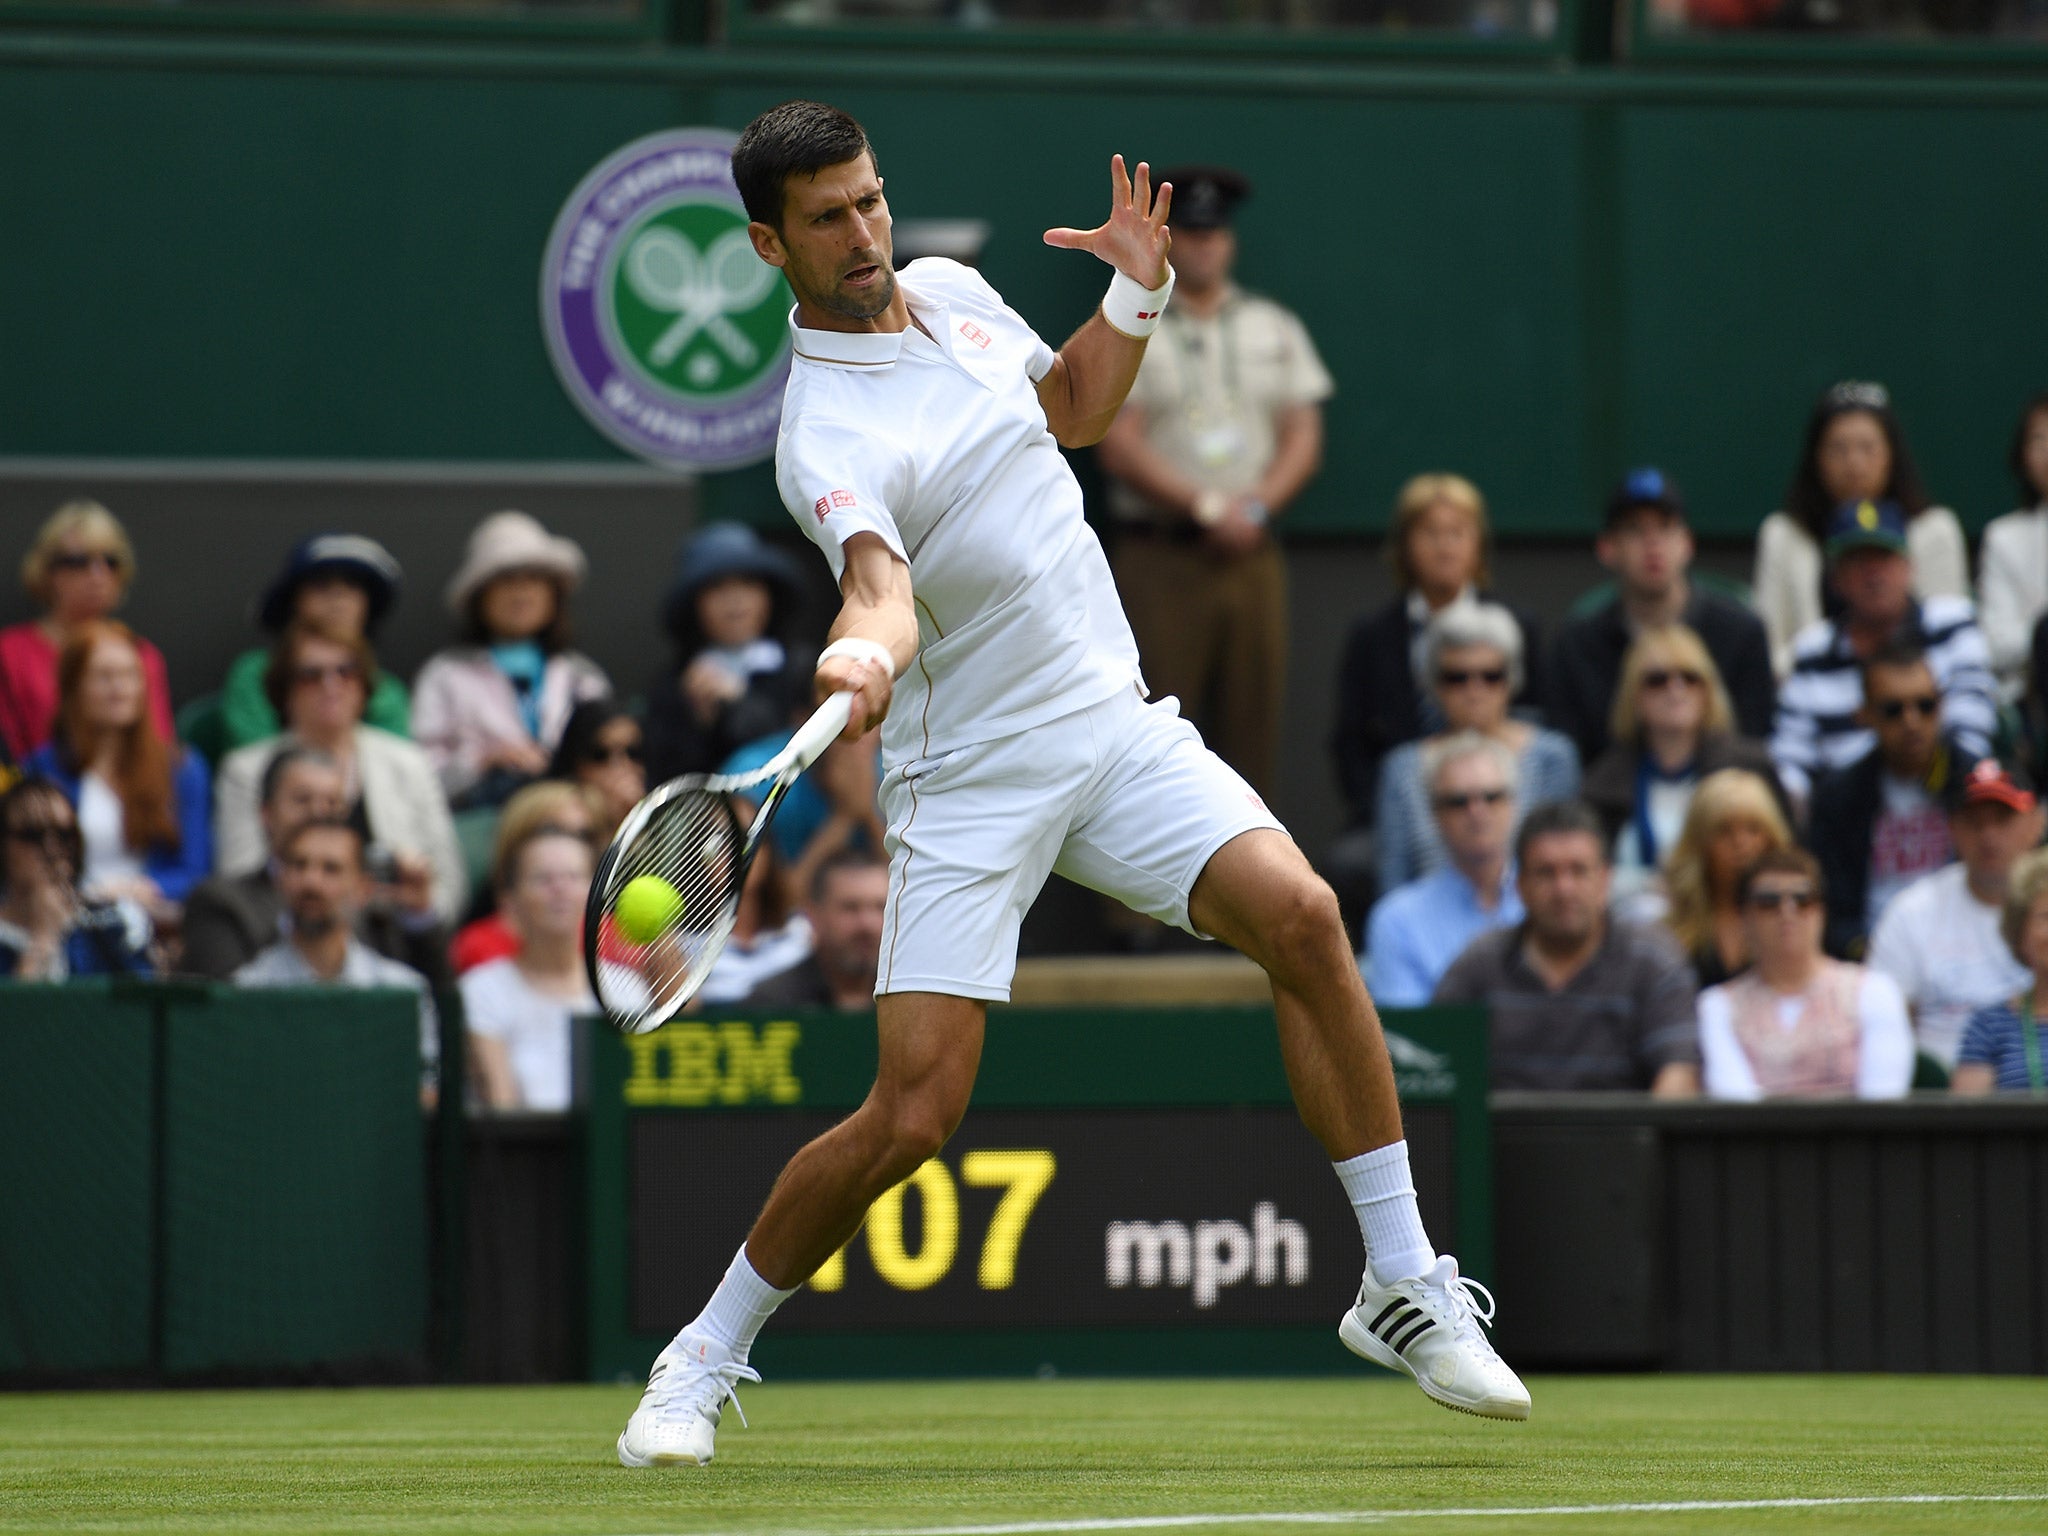 Novak Djokovic beat Britain's James Ward 6-0, 7-6, 6-4